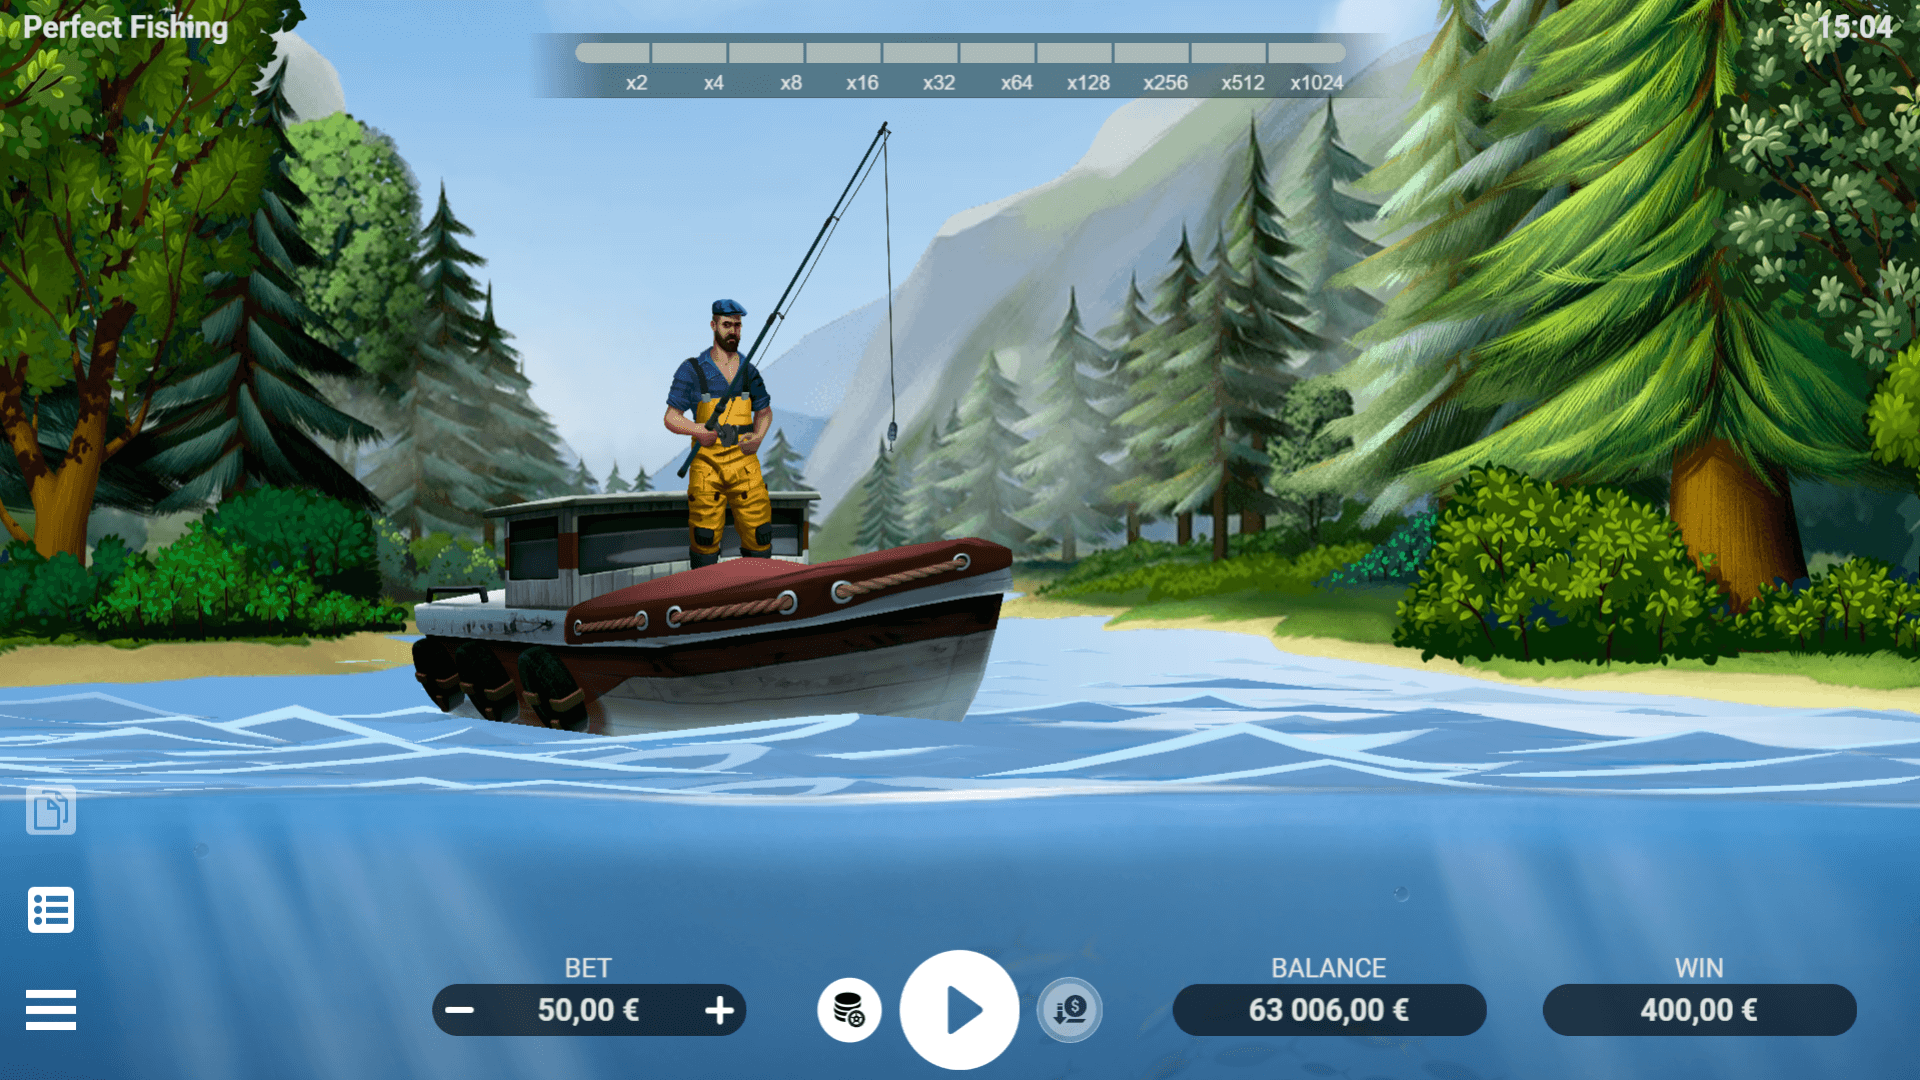 Perfect Fishing Evoplay slotxo ฟรีเครดิต